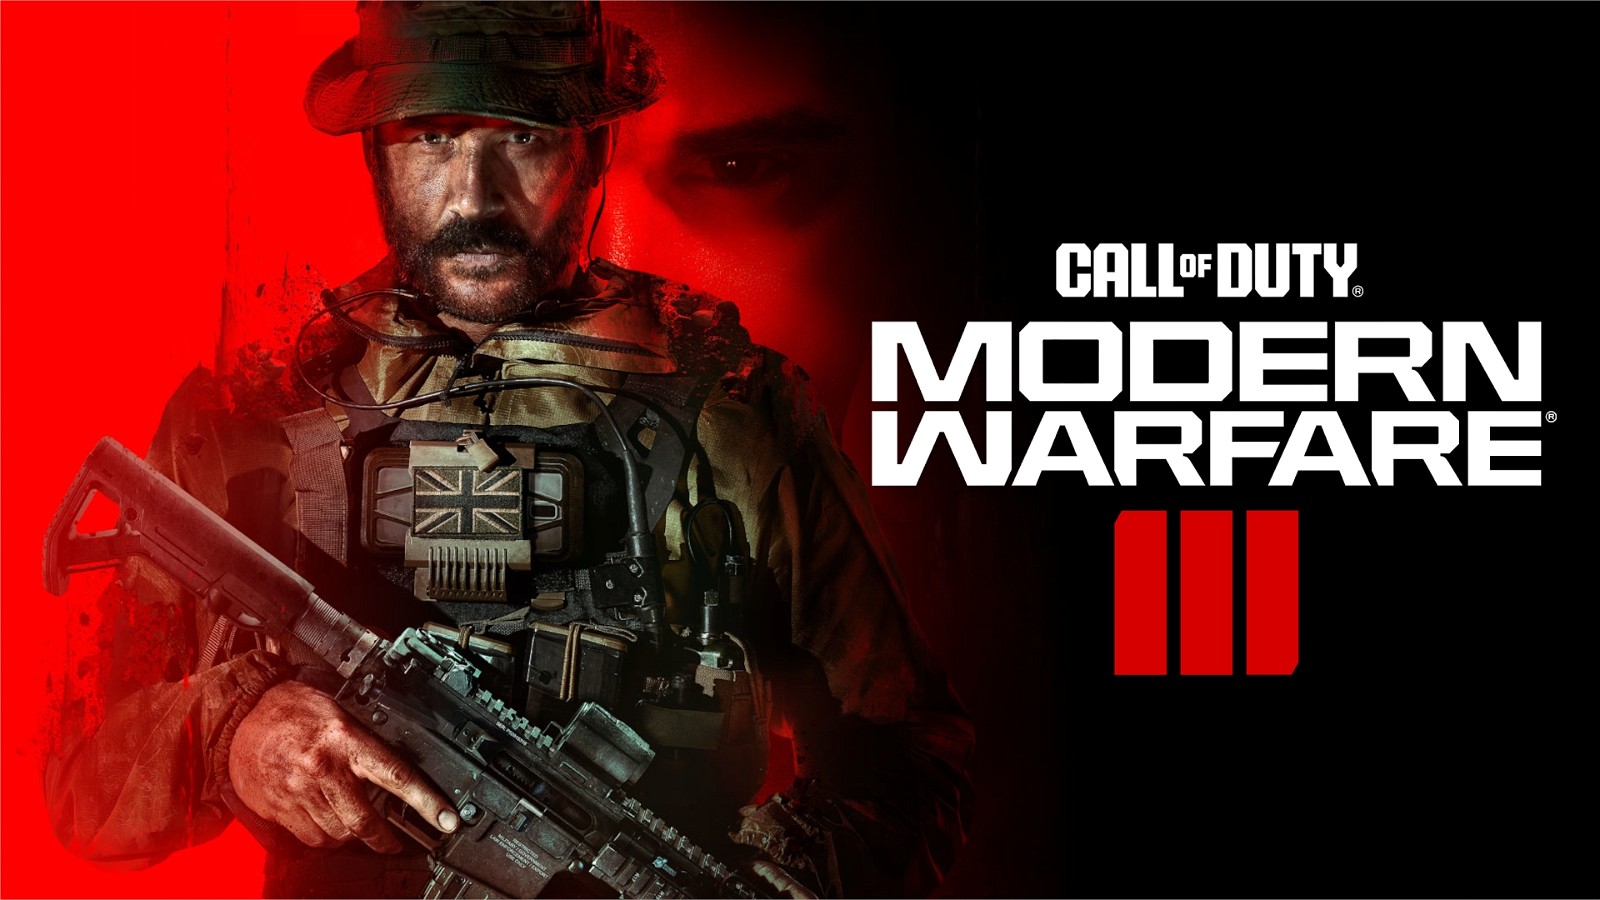 The Modern Warfare 3 will be releasing between October 8-10.